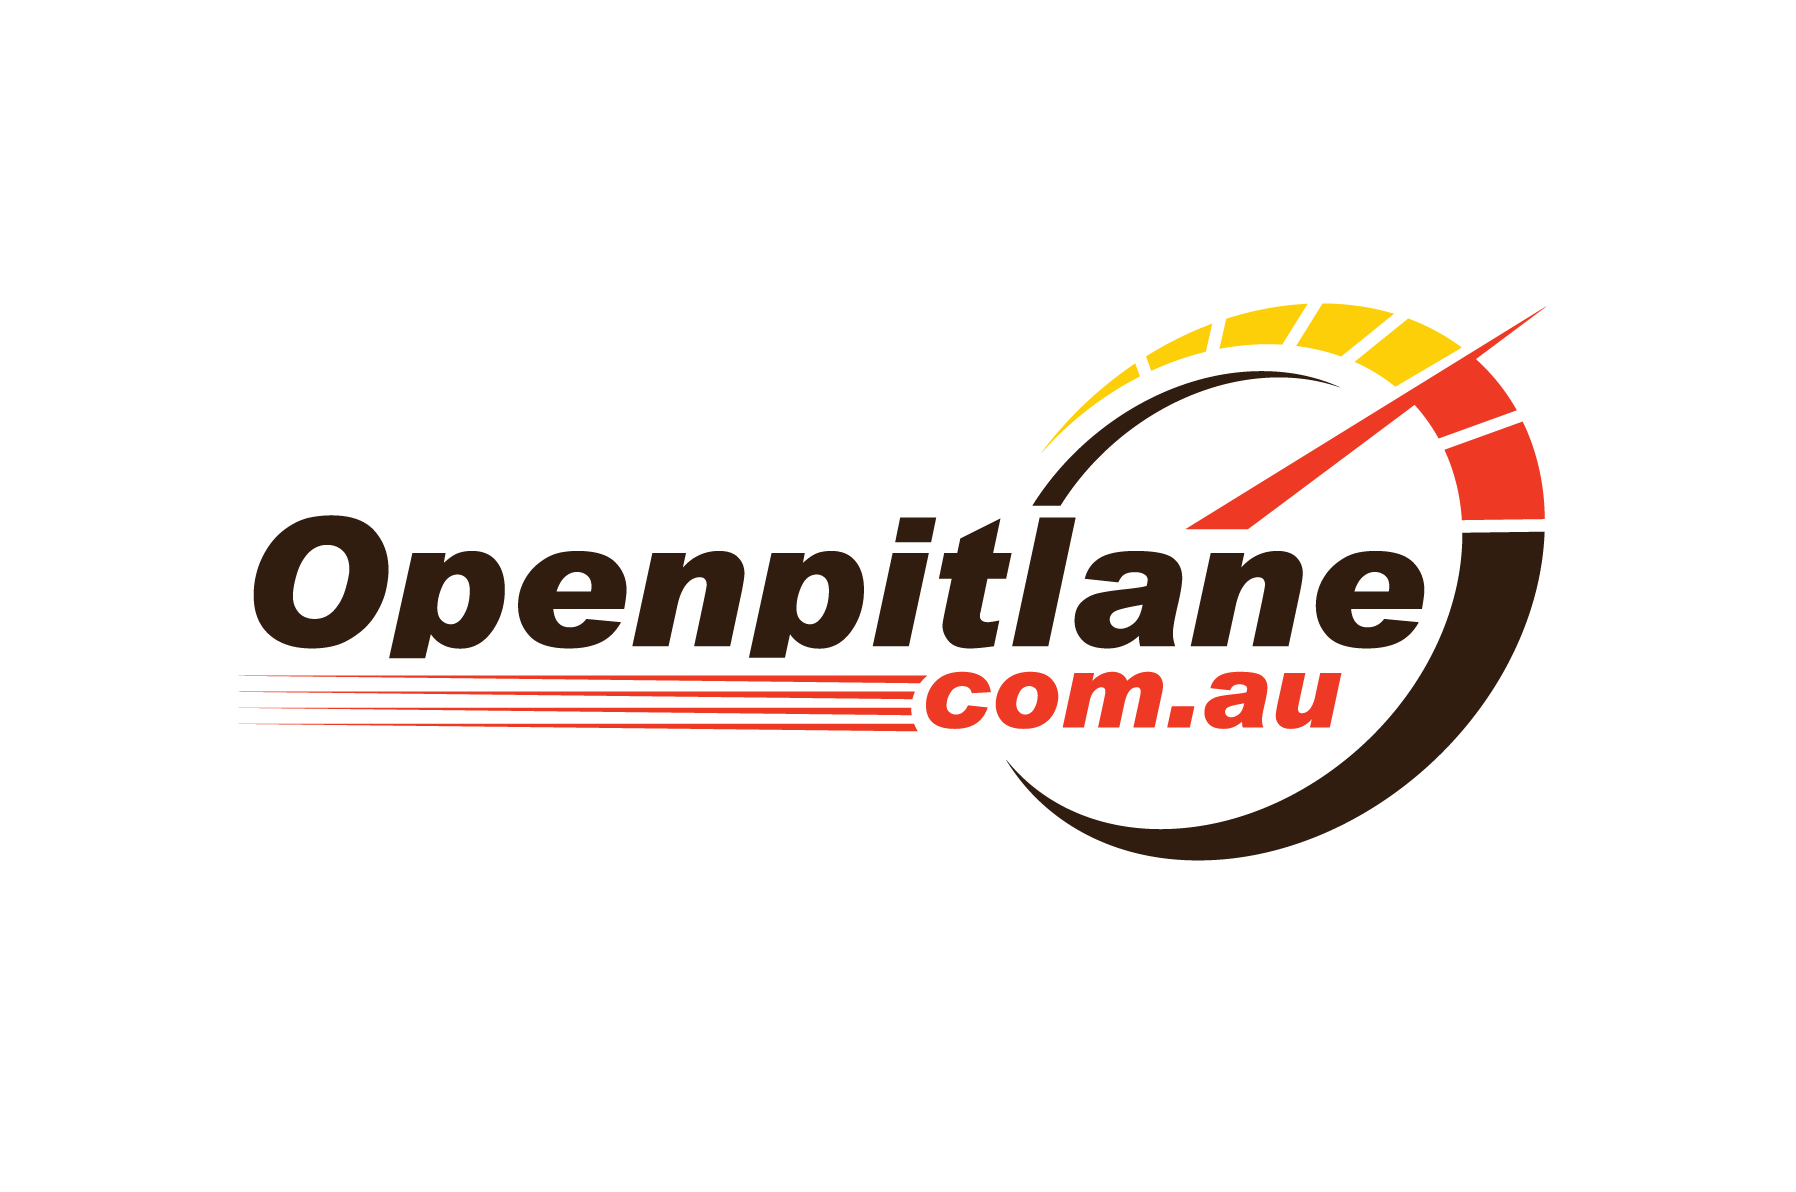 Openpitlane.com.au